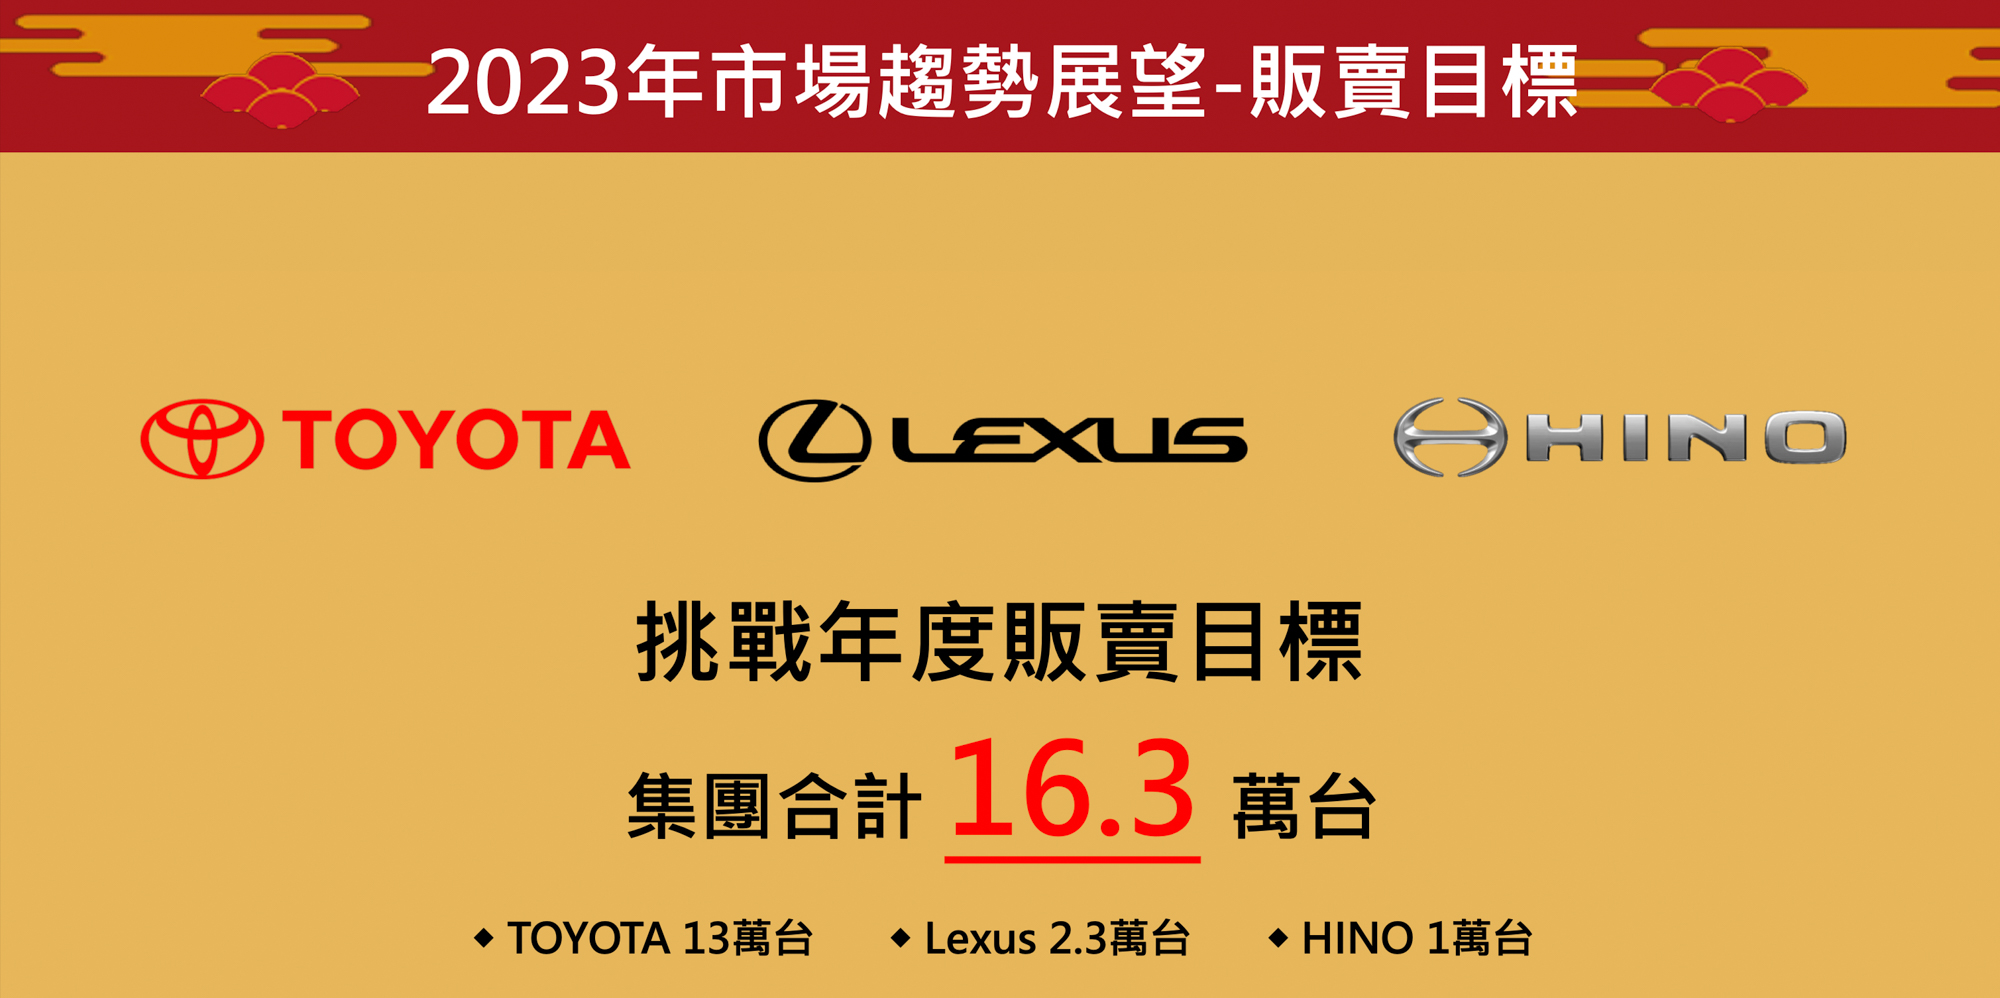 Toyota / Lexus / HINO 三品牌年度銷售目標將達 16.3 萬輛。